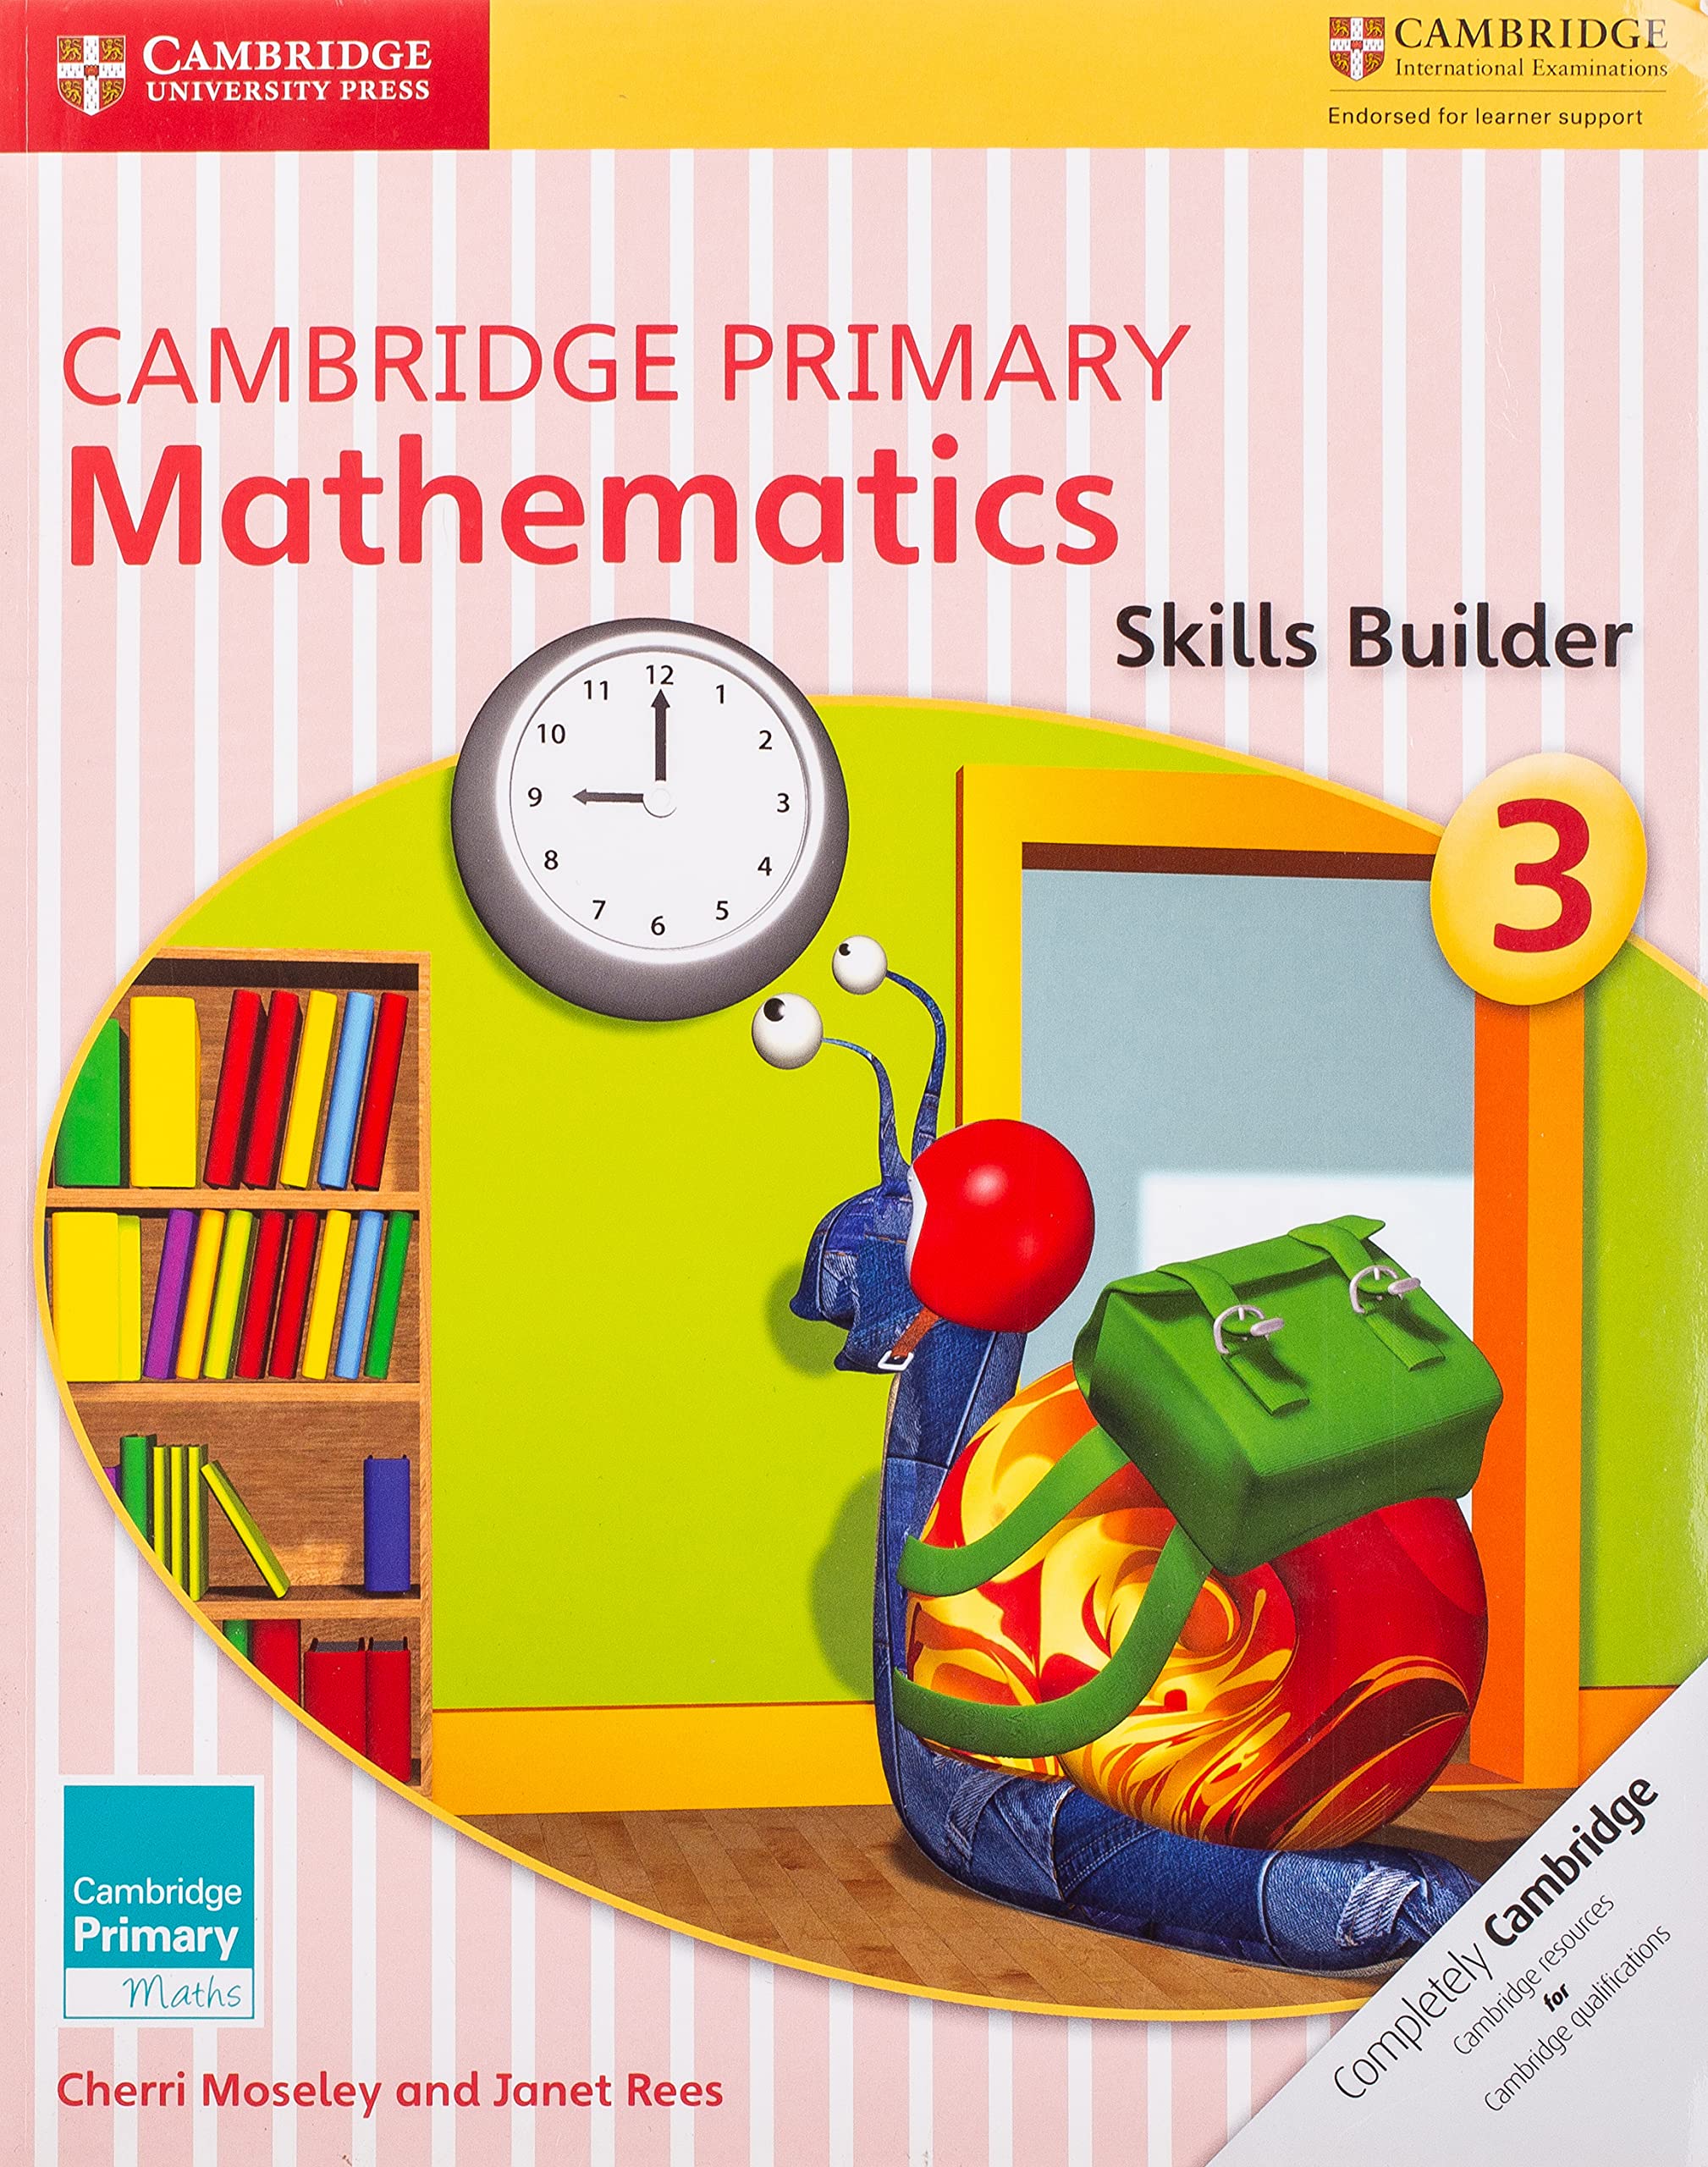 Cambridge mathematics. Cambridge Primary Math. Primary Mathematics. Cambridge Primary Mathematics skills Builder 2. Cambridge Primary Mathematics Challenge 1.